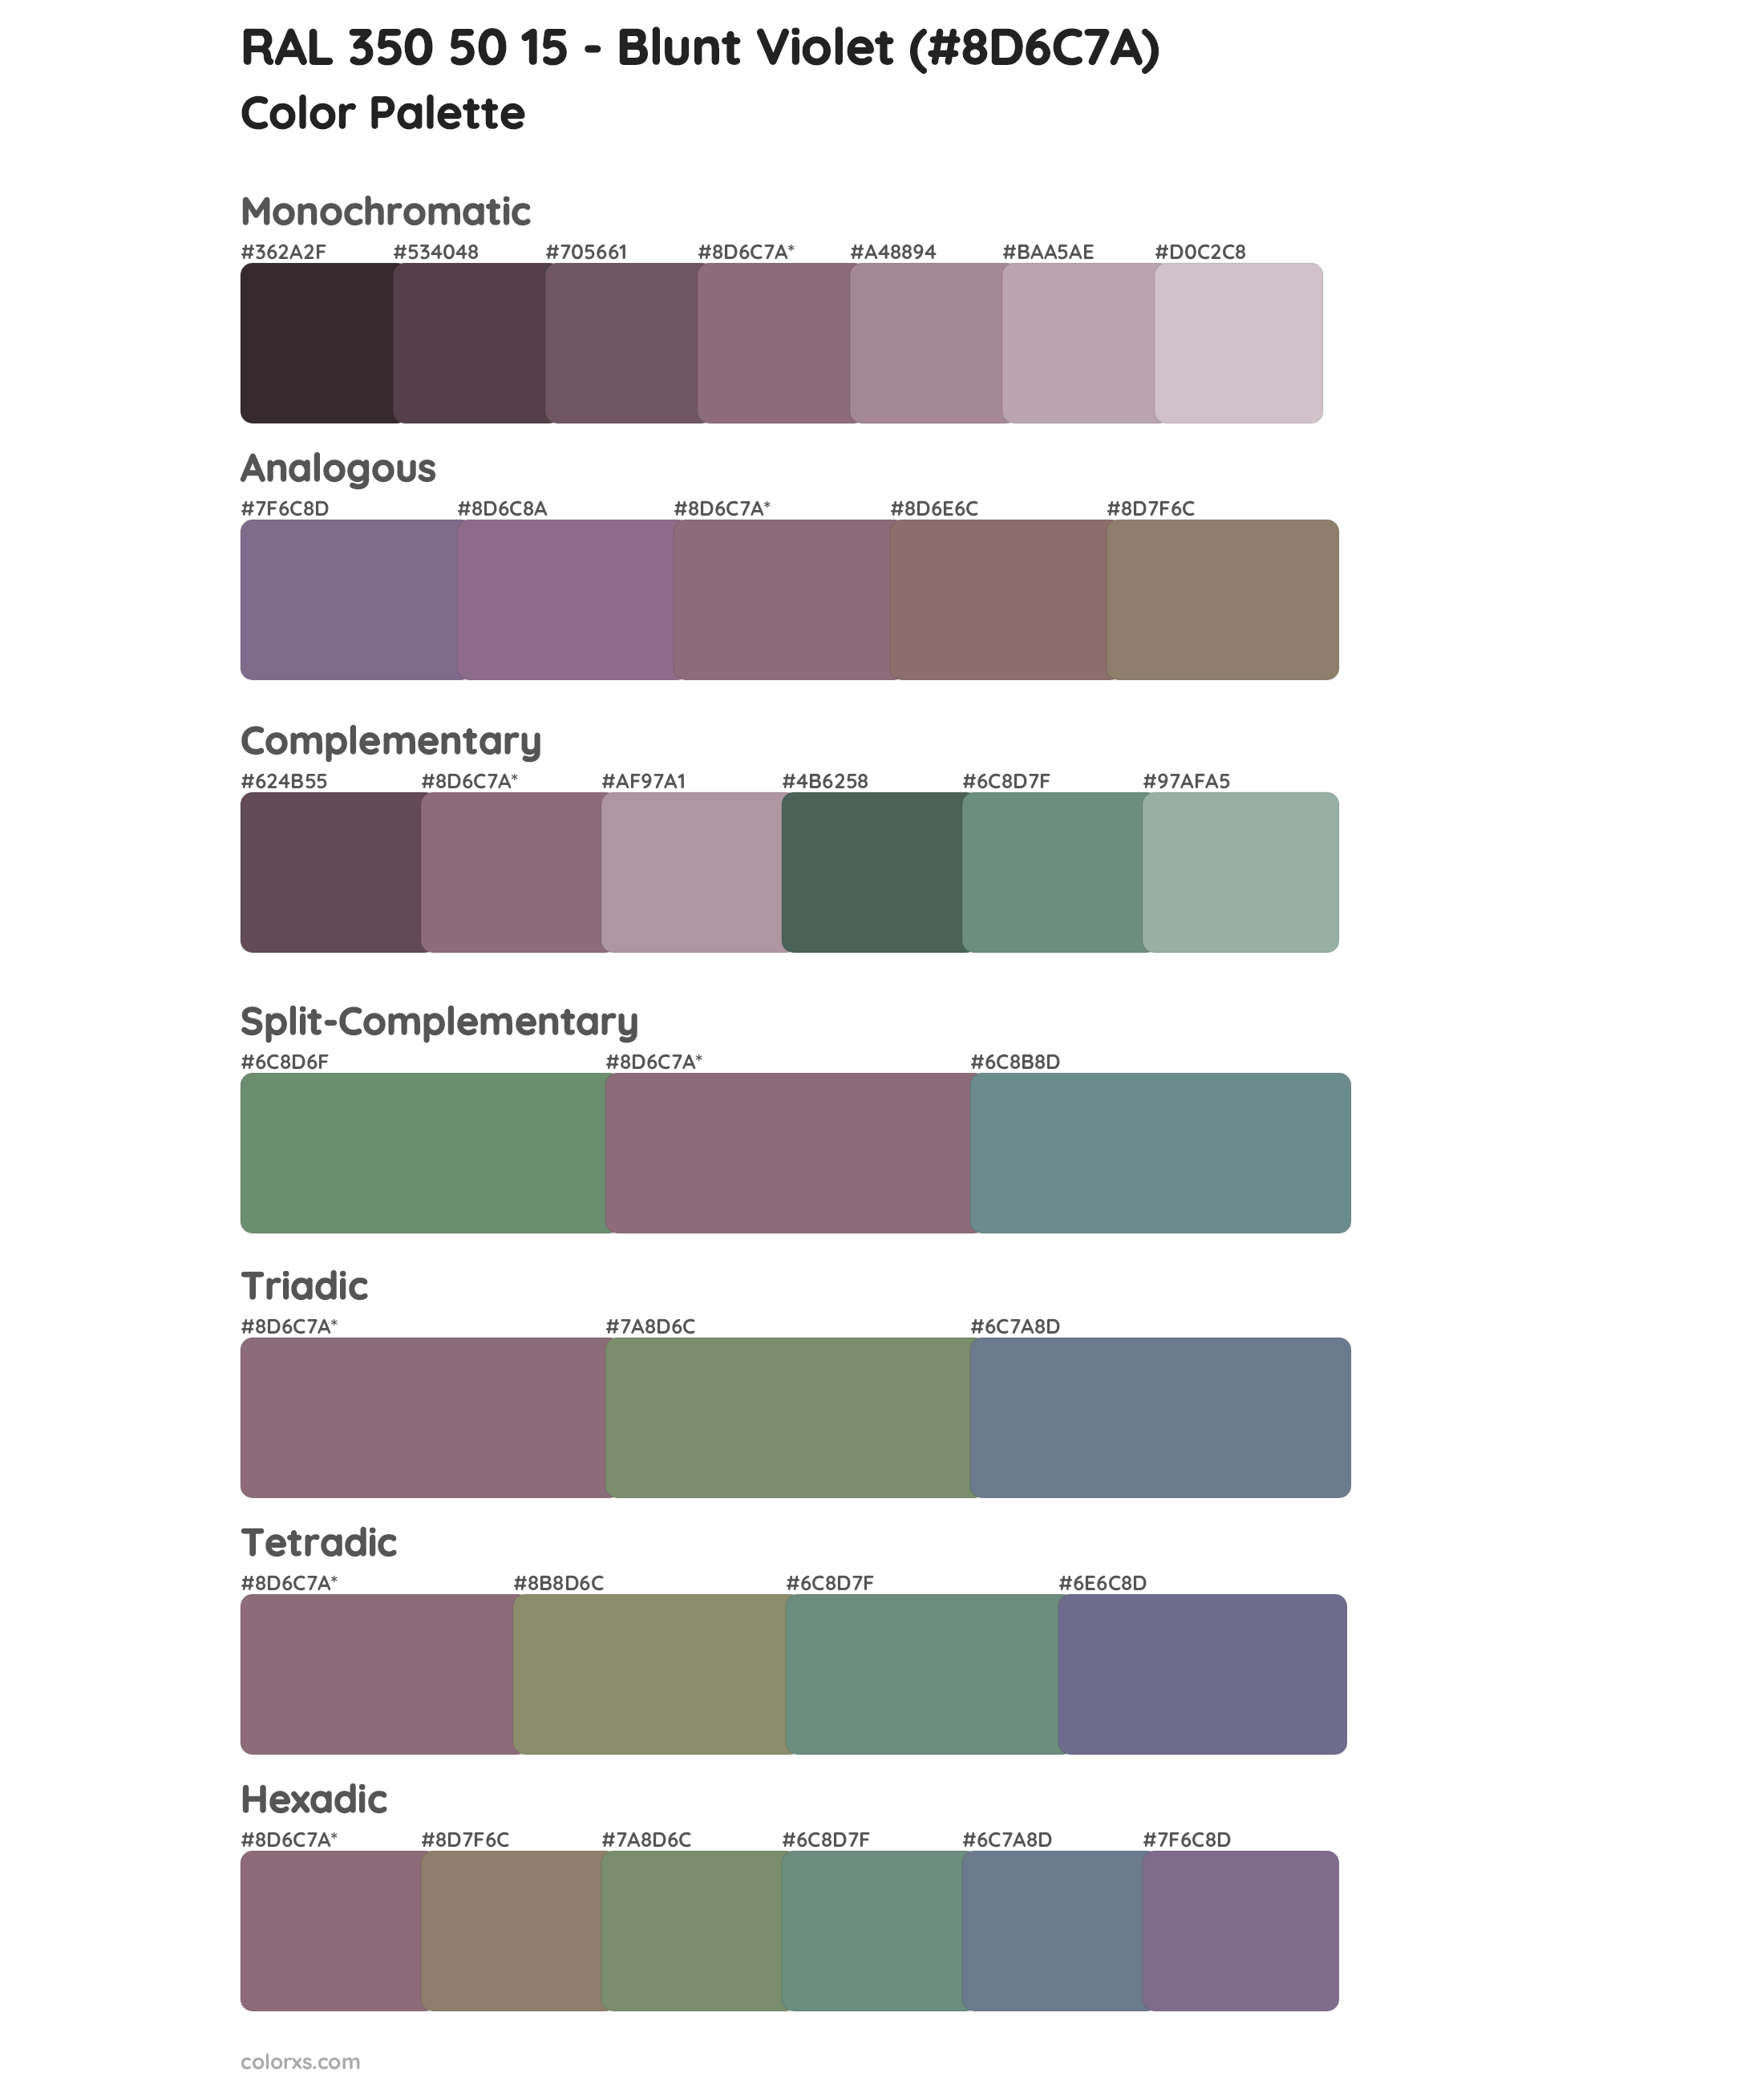 RAL 350 50 15 - Blunt Violet Color Scheme Palettes